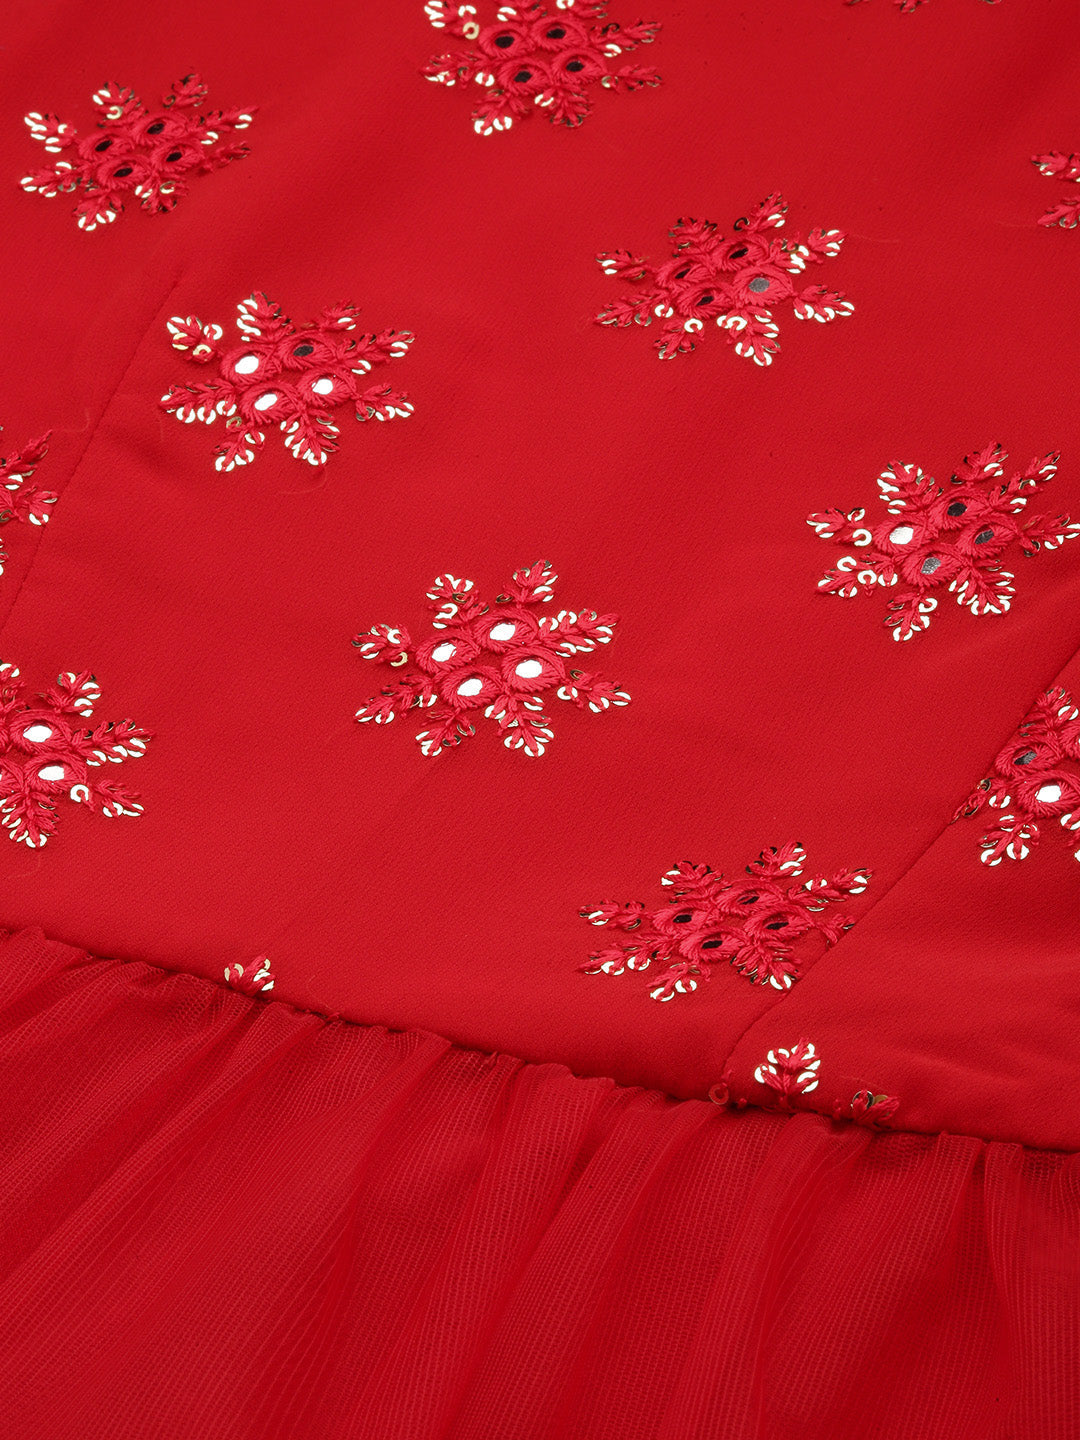 Cardinal-Red-Georgette-Halter-Neck-Net-Dress